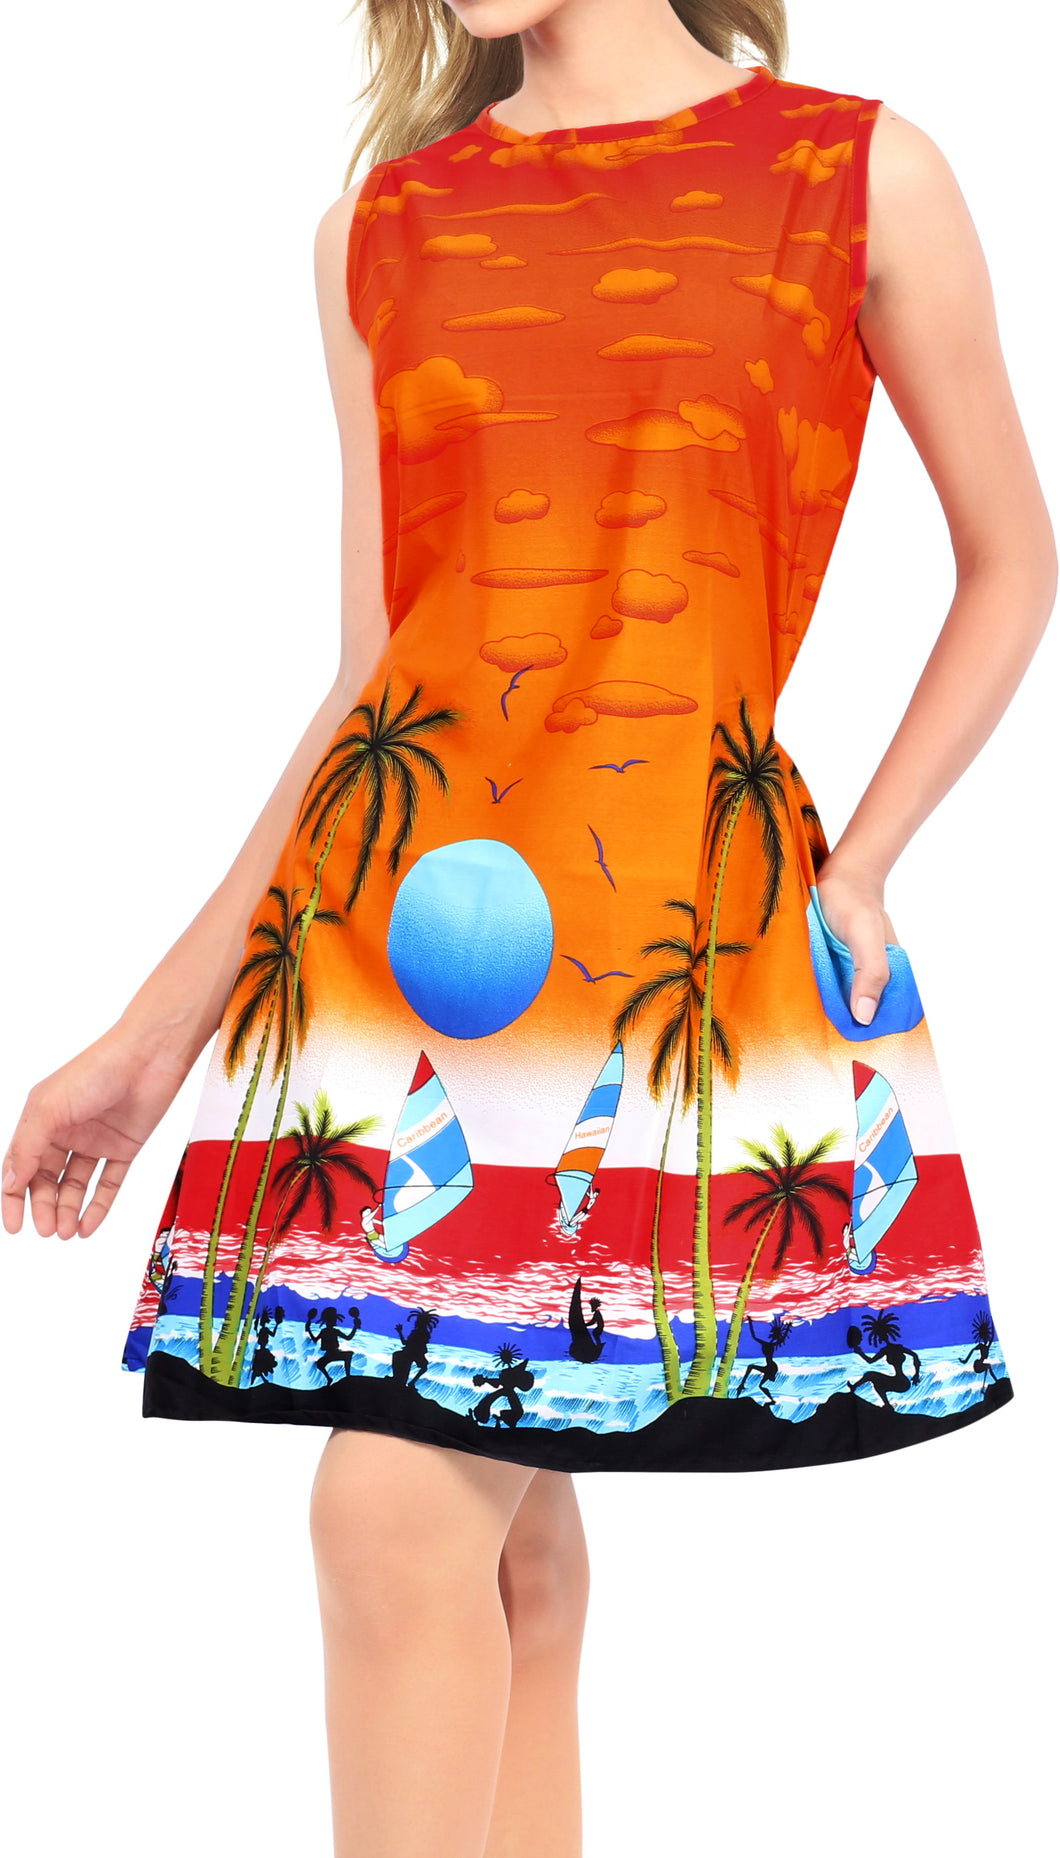 LA LEELA Women Bathing Suit Cover Ups Tops Beach Swimwear US 10 [M] Orange_U801